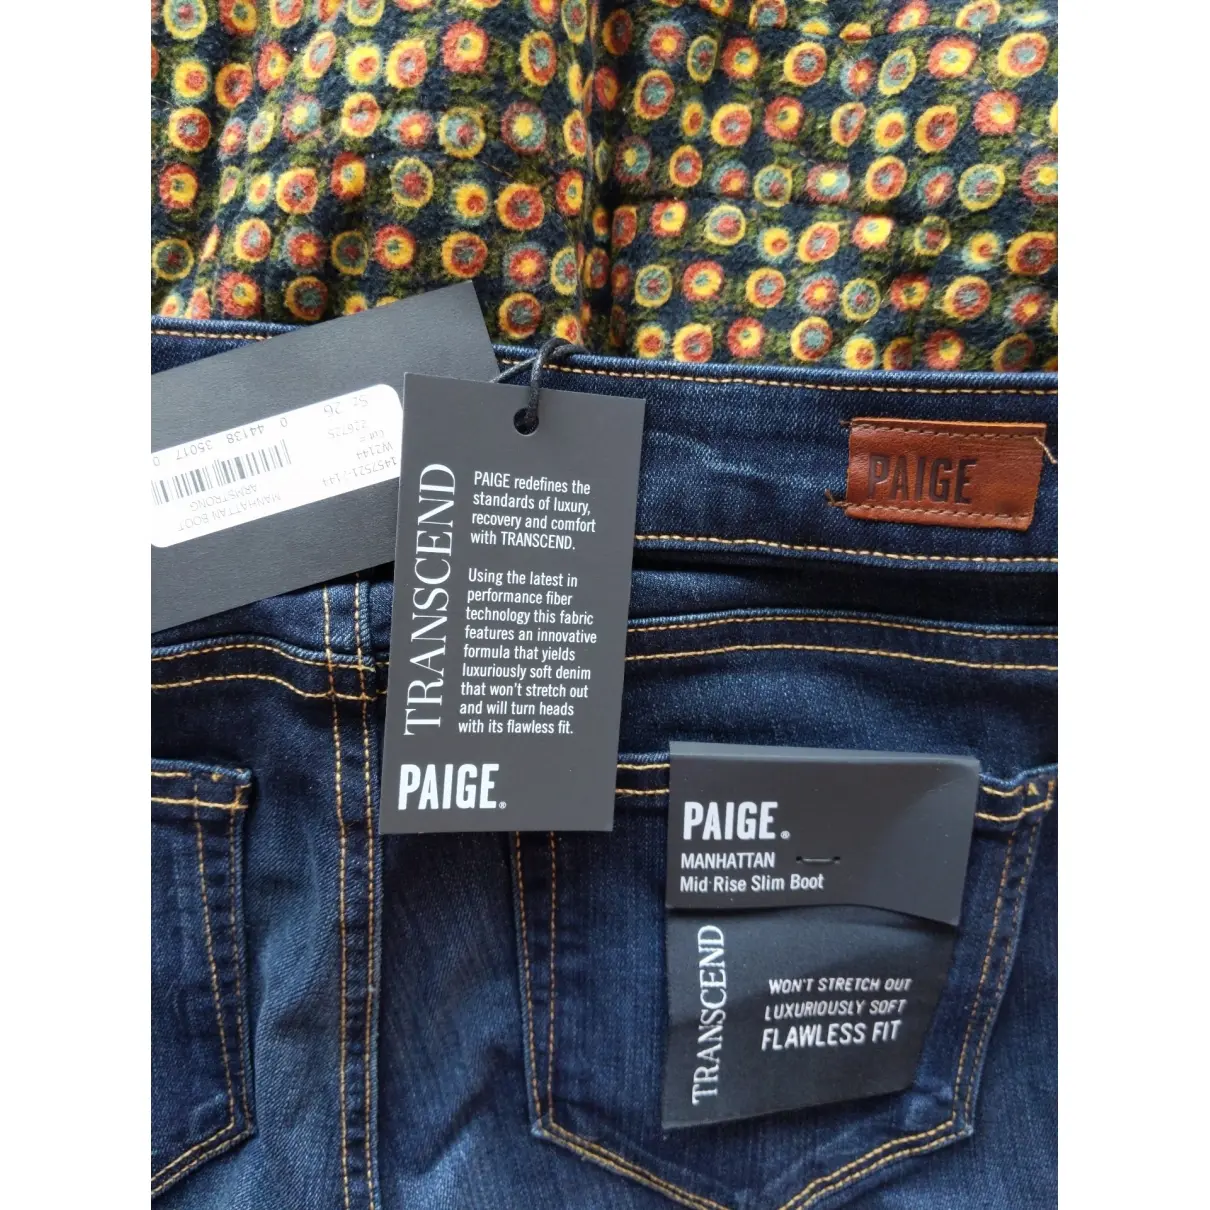 Buy Paige Jeans Bootcut jeans online